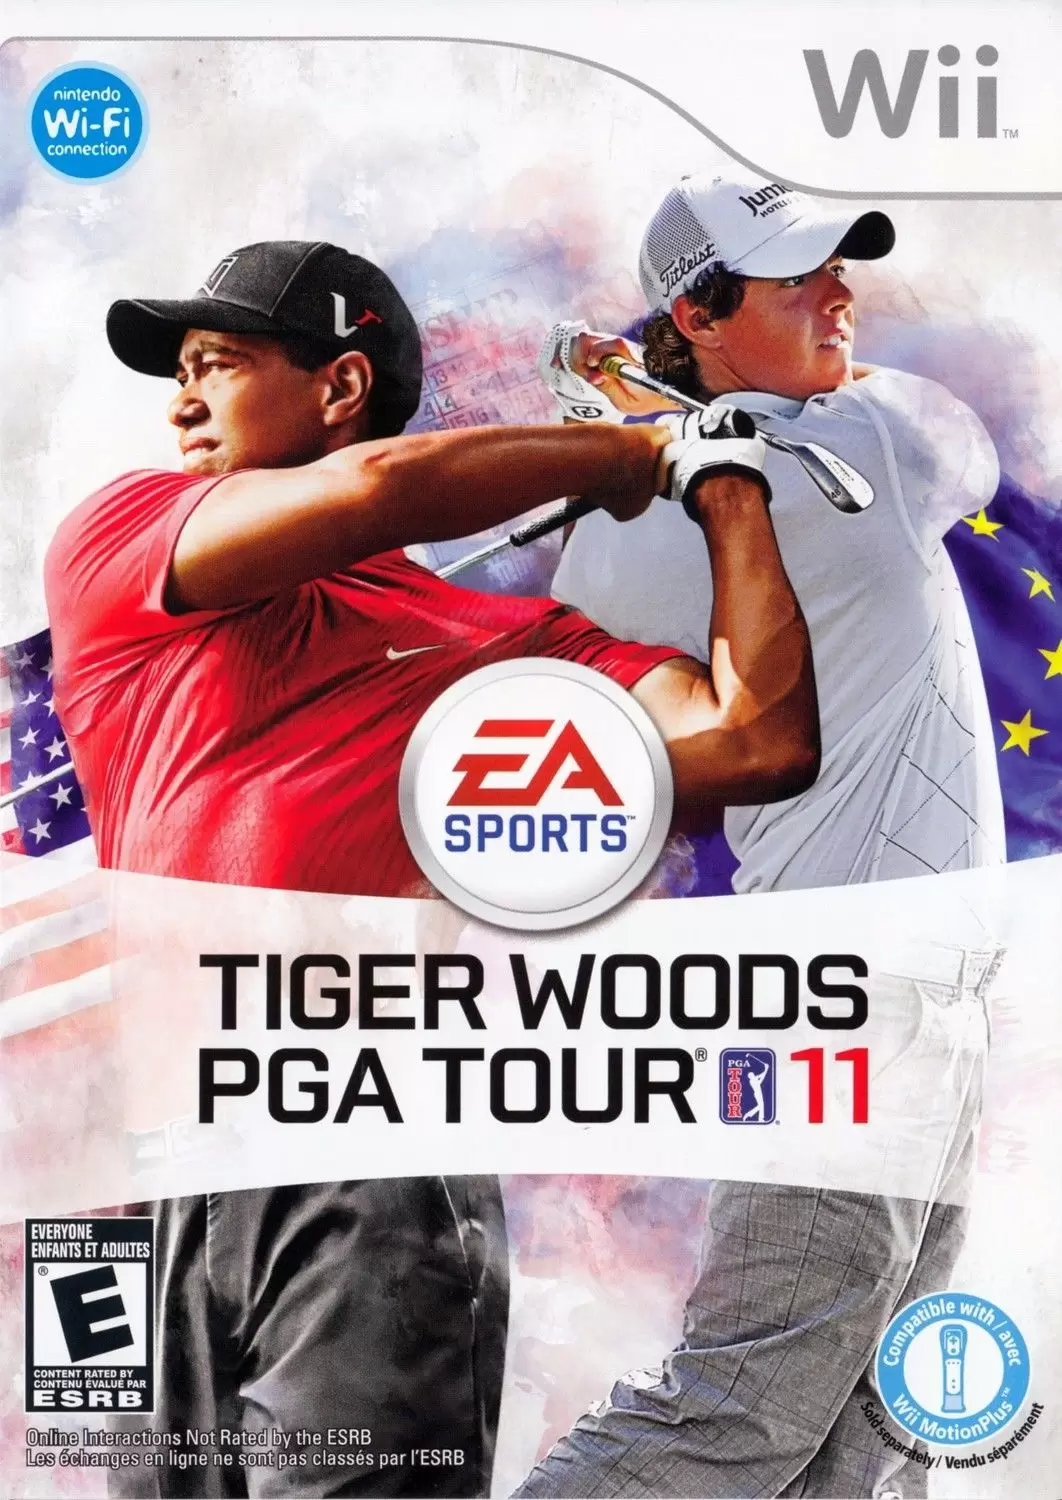 Nintendo Wii Games - Tiger Woods PGA Tour 11